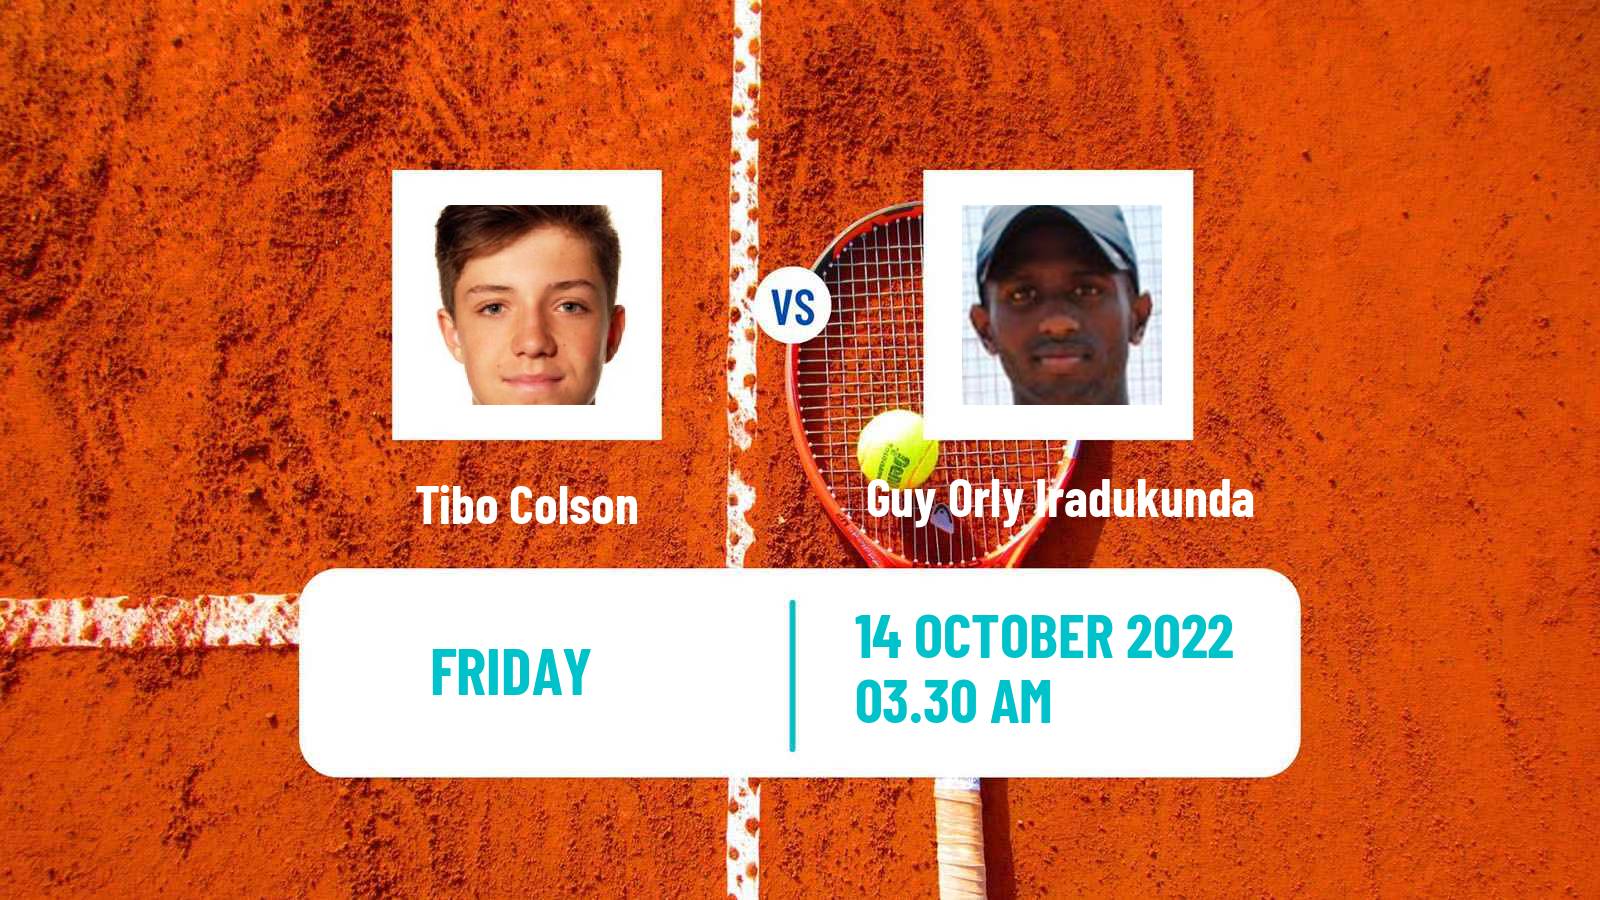 Tennis ITF Tournaments Tibo Colson - Guy Orly Iradukunda